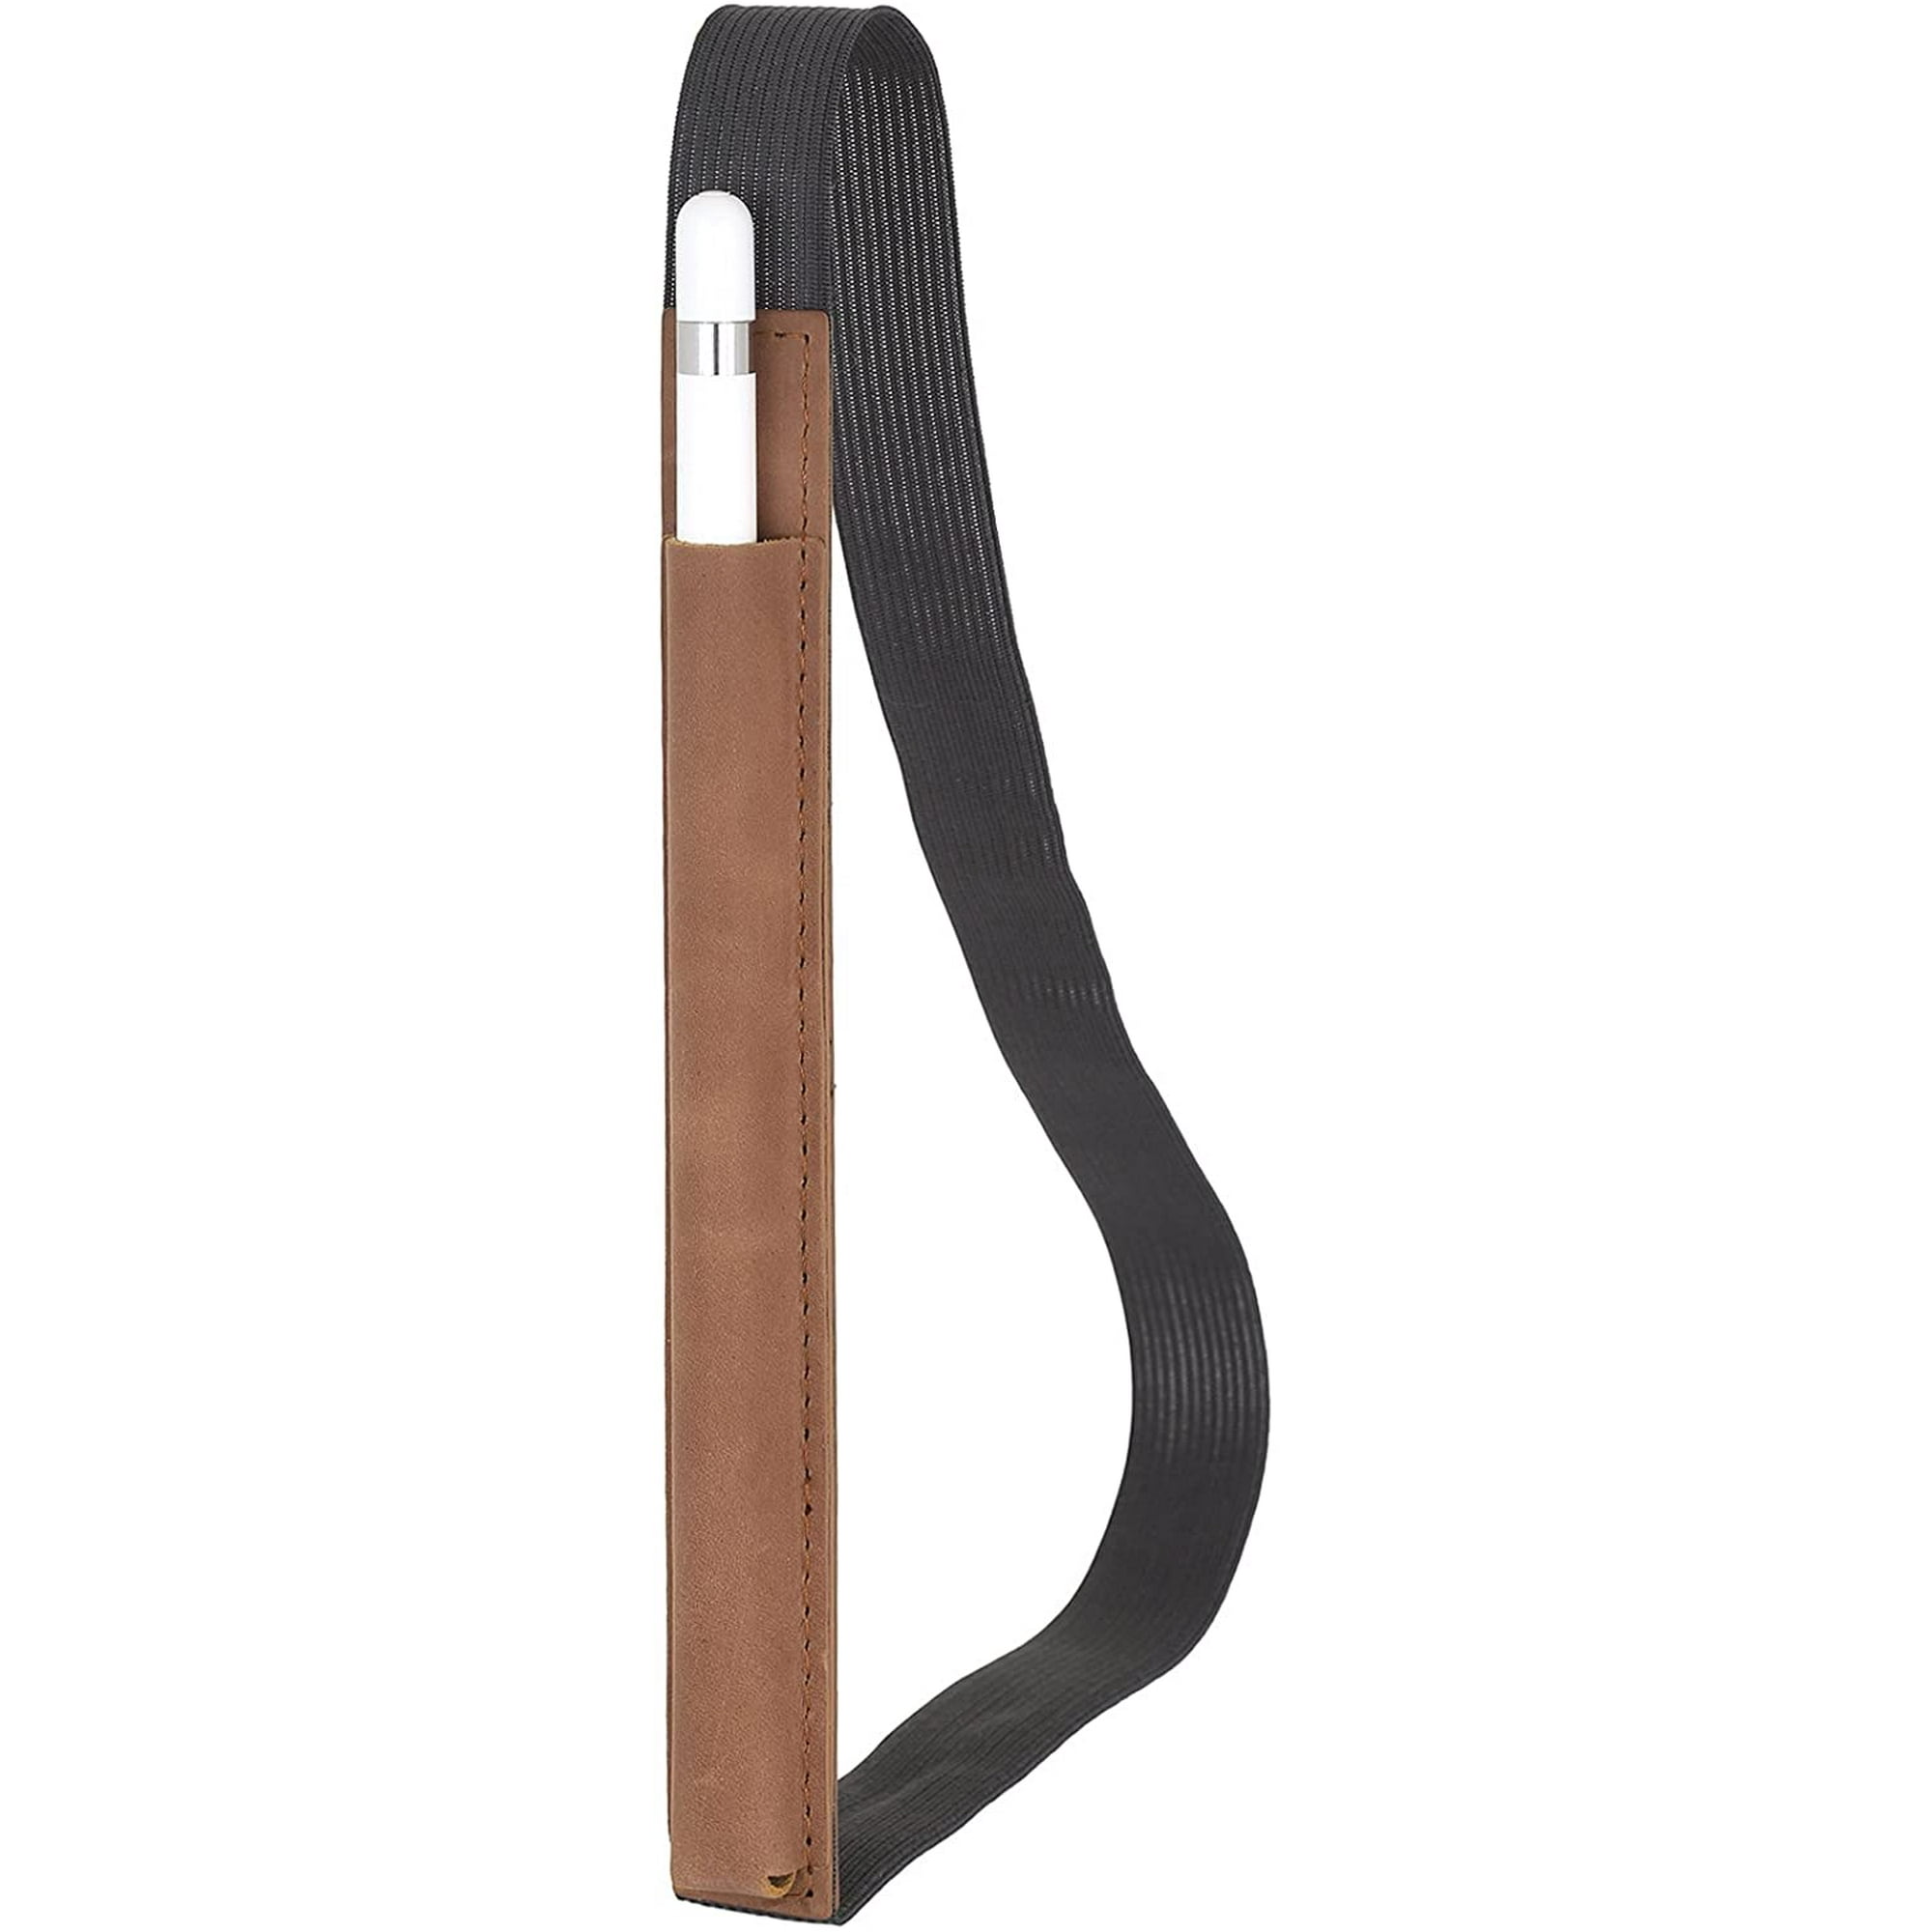 StilGut Genuine Leather Pencil Holder for Apple Pencil 1 /& iPad Pro 12,9 2015 /& 2017 Sleeve Case Cognac Vintage